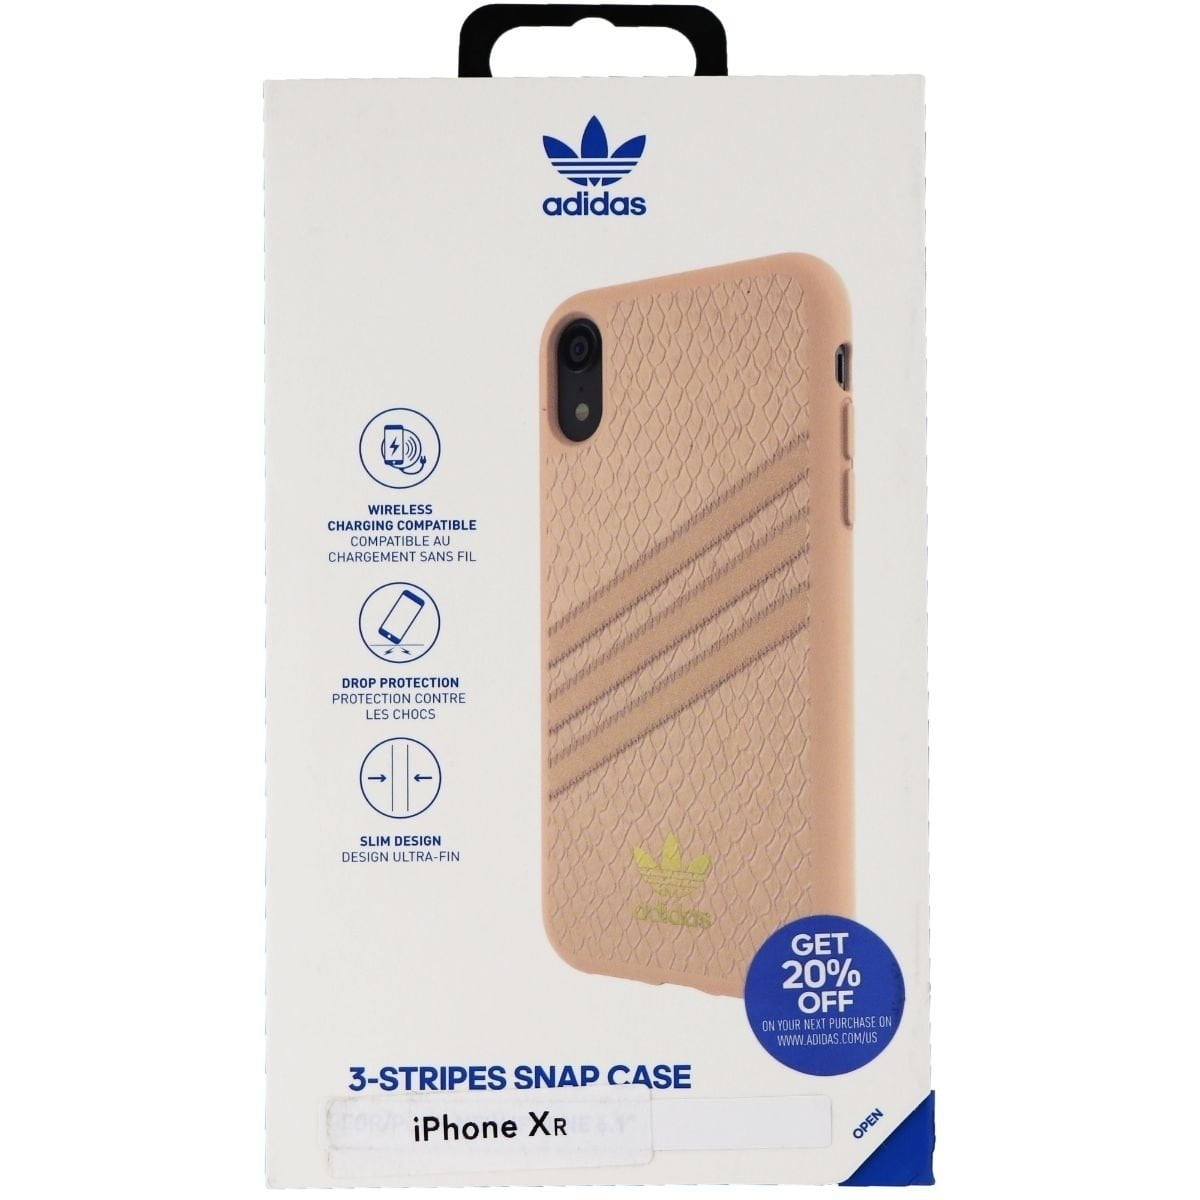 Aan het liegen Persona Adviseur Adidas Snake Moulded 3-Stripes Snap Case for iPhone XR - Pink/Gold Metallic  - Walmart.com